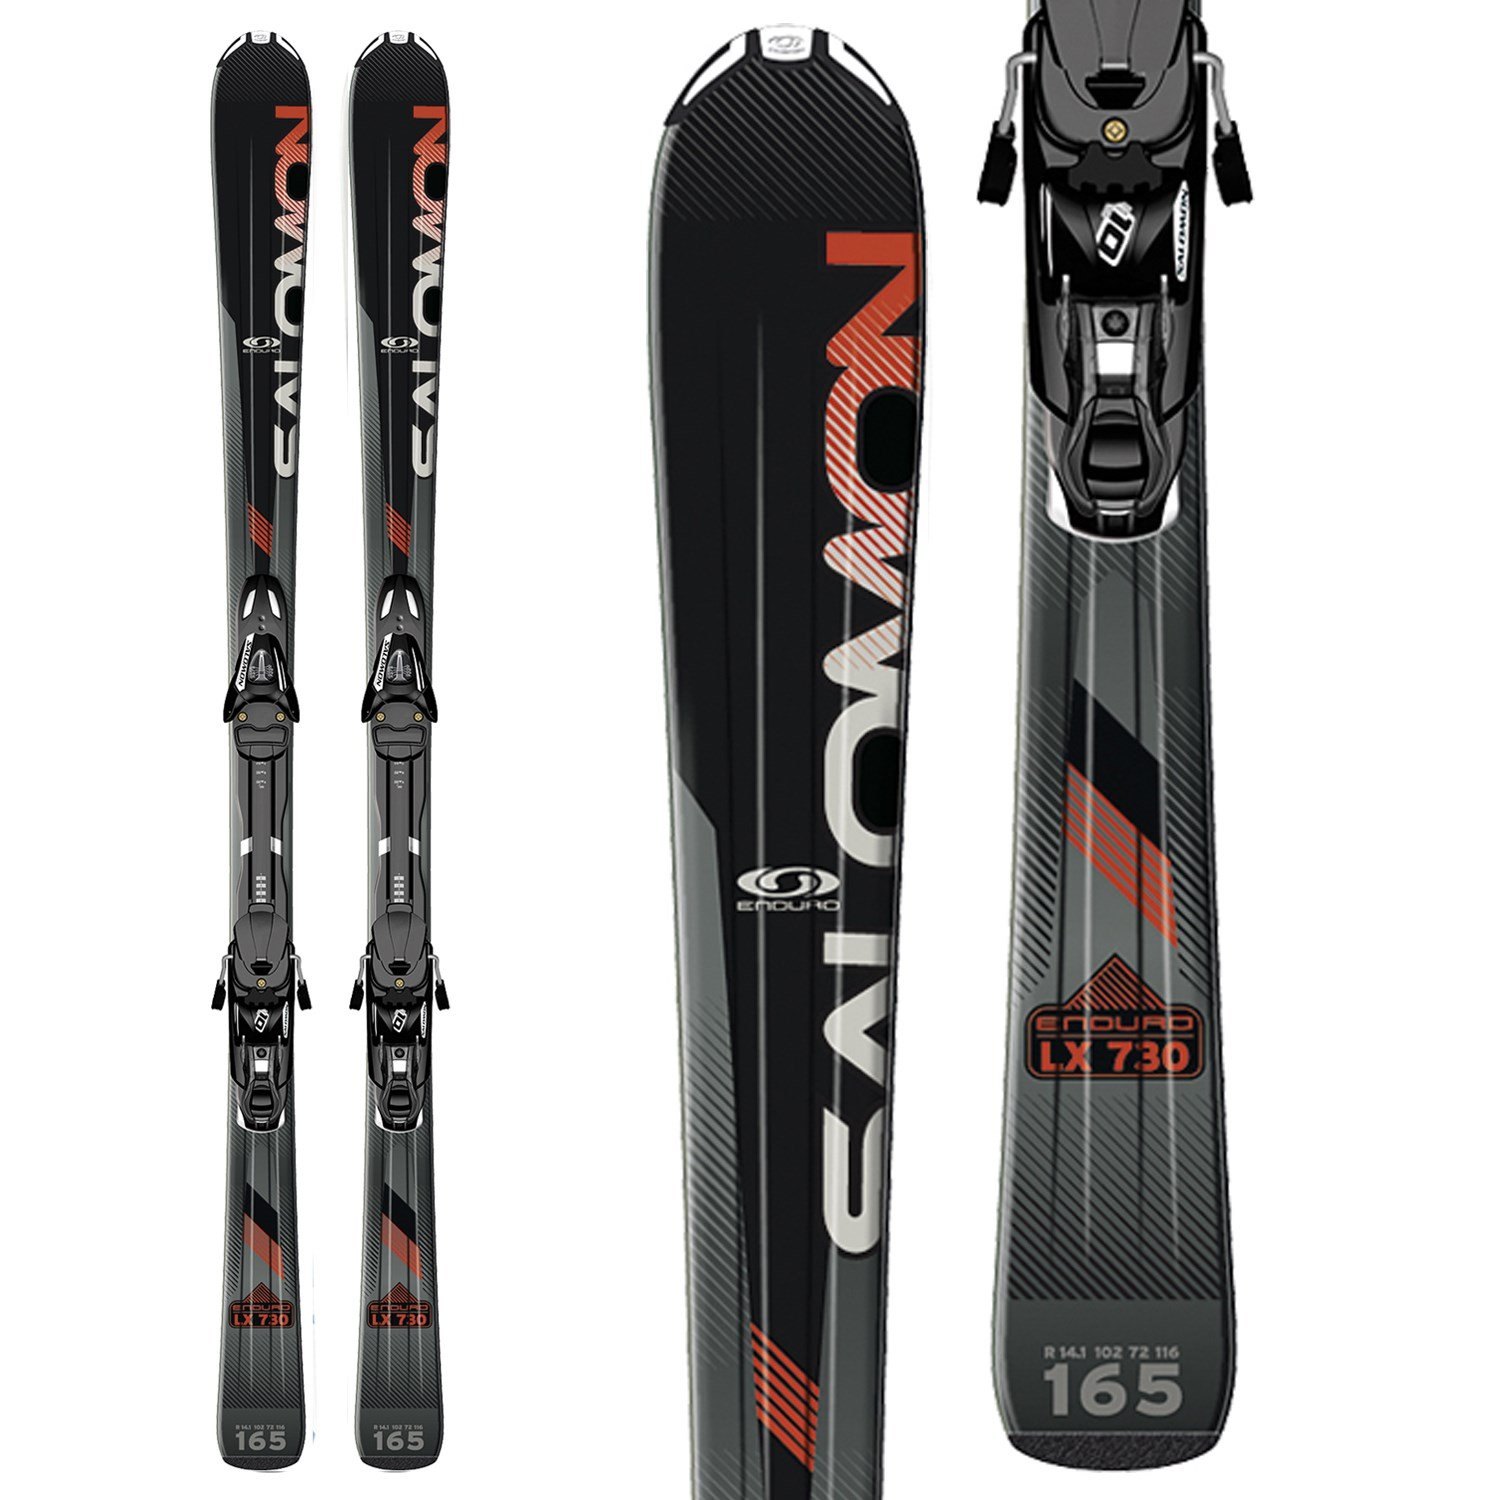 Salomon Enduro LX 730 Skis + L10 